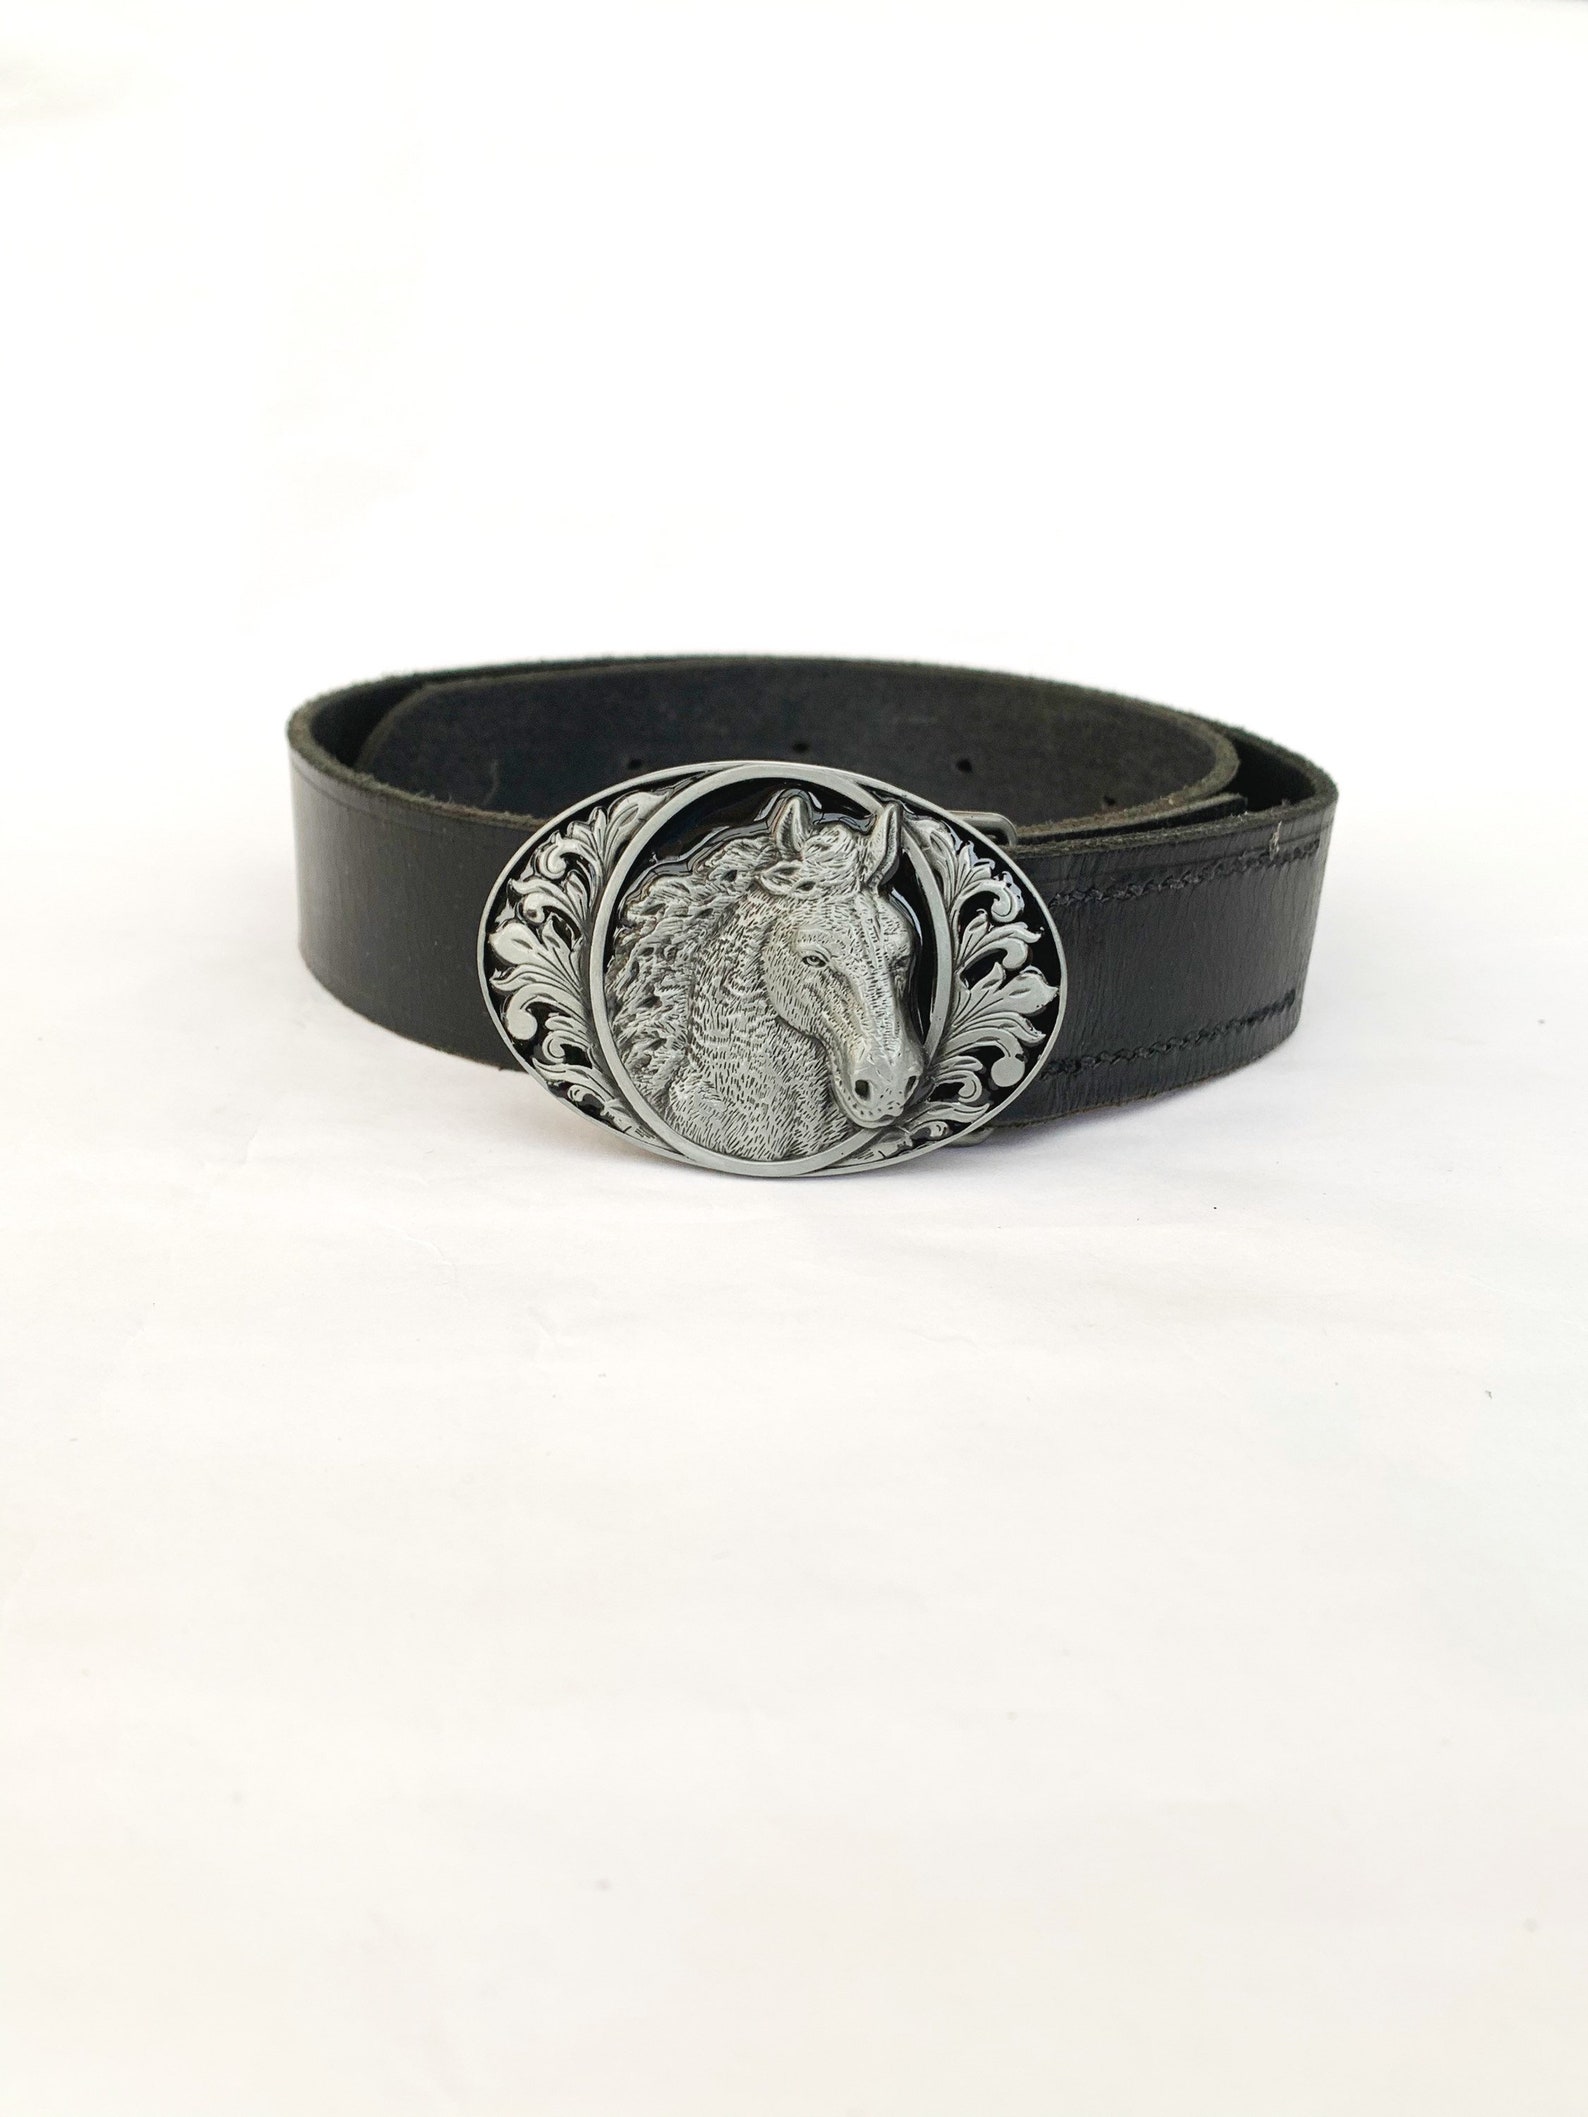 Horse Belt Horse Lover Gift Belts For Women Equestrian | Etsy